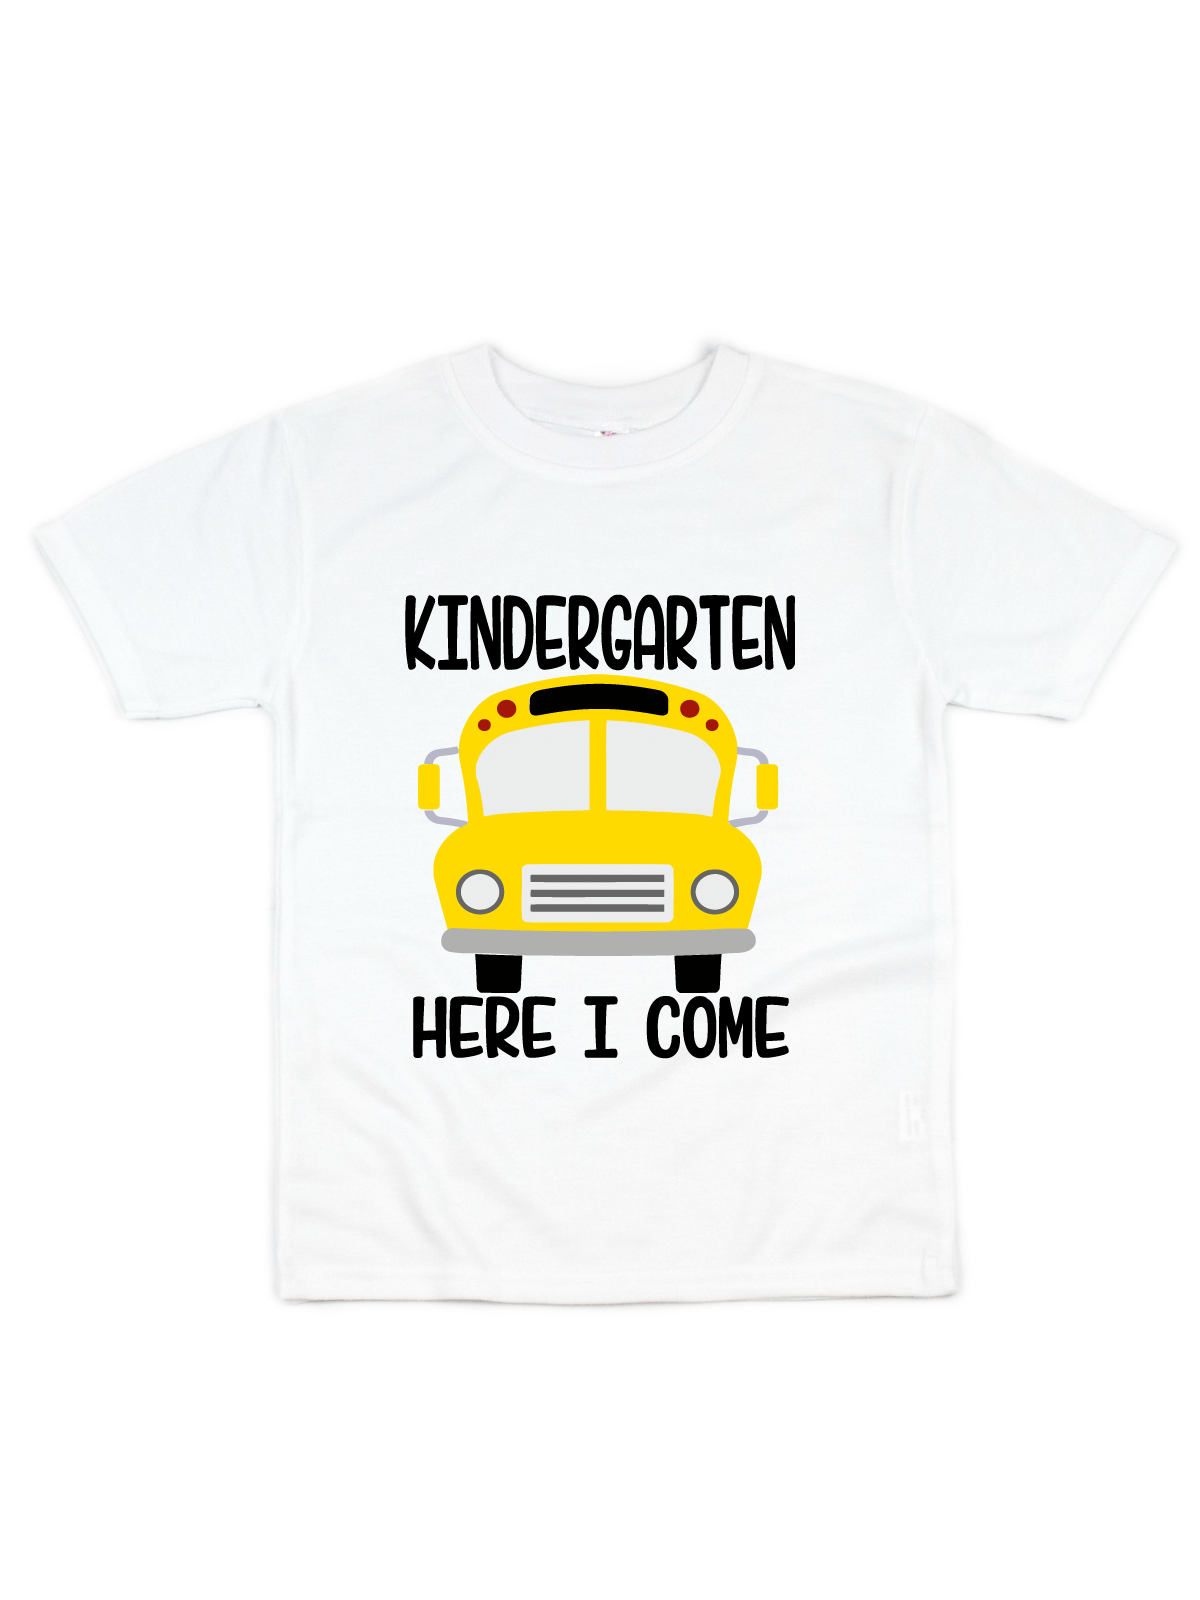 Kindergarten Here I Come Kids Shirt in White